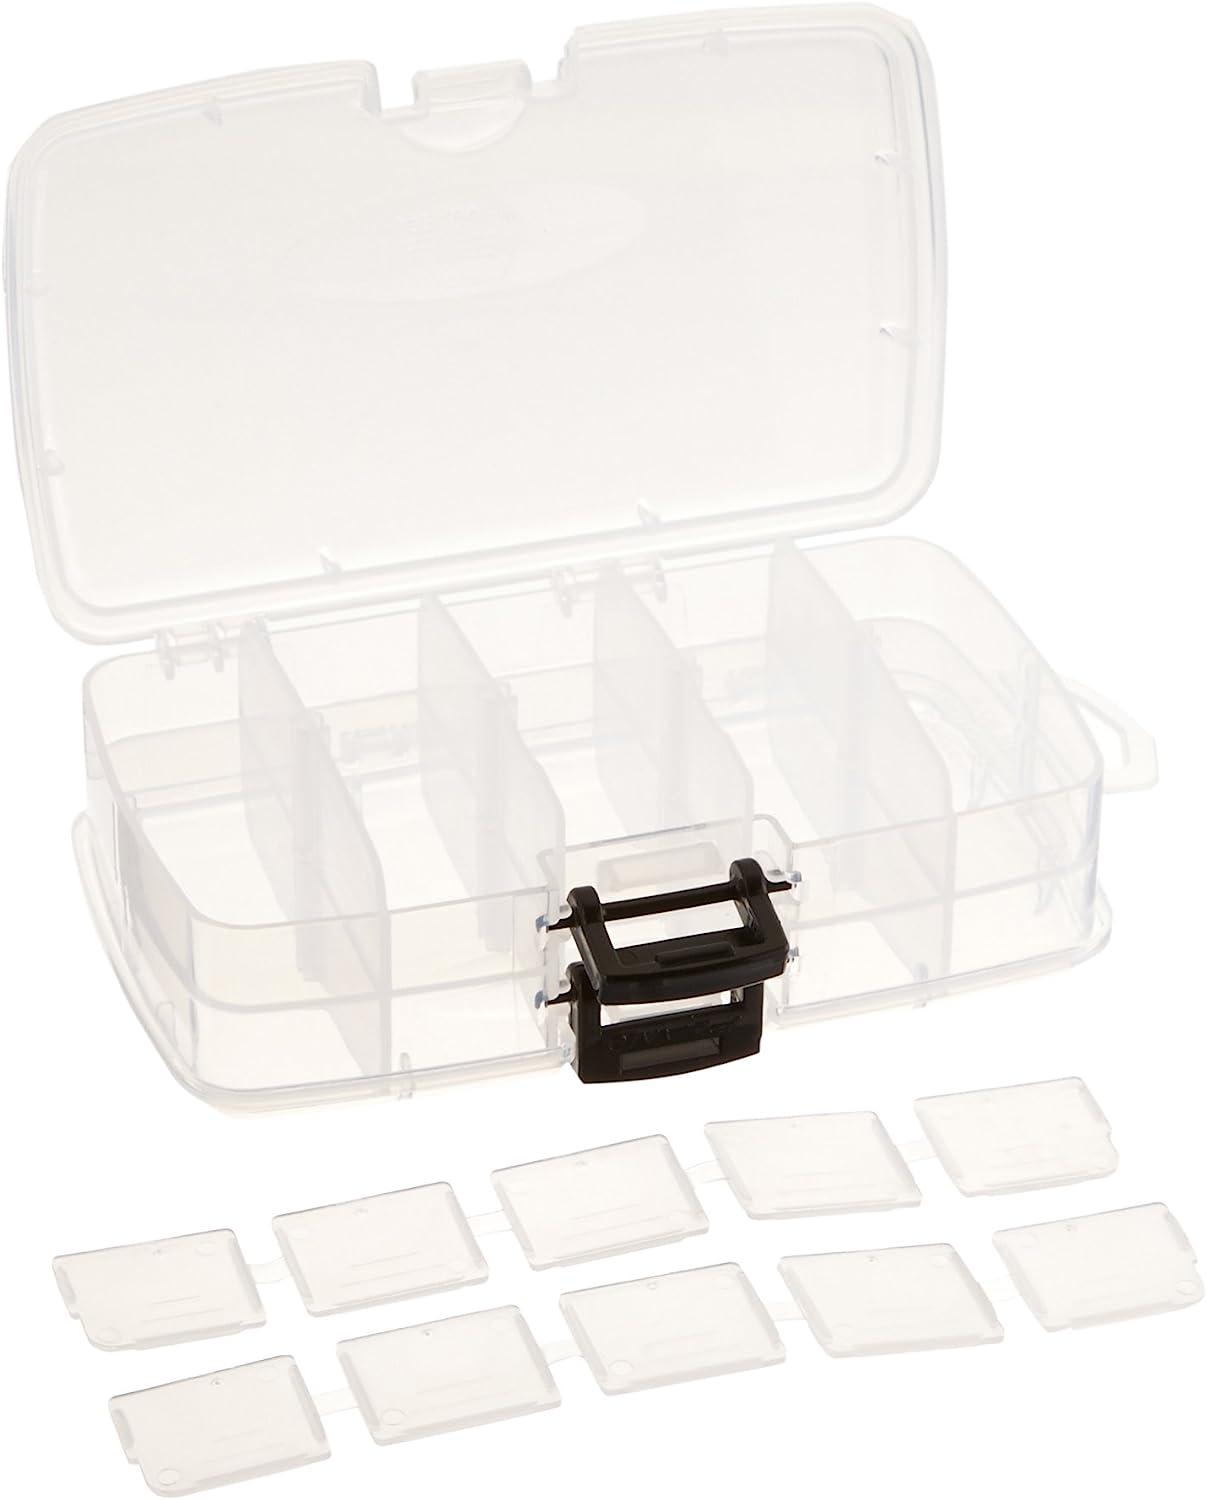 Plano Adjustable Double-Sided StowAway Tackle Box Premium Tackle Storage  3400